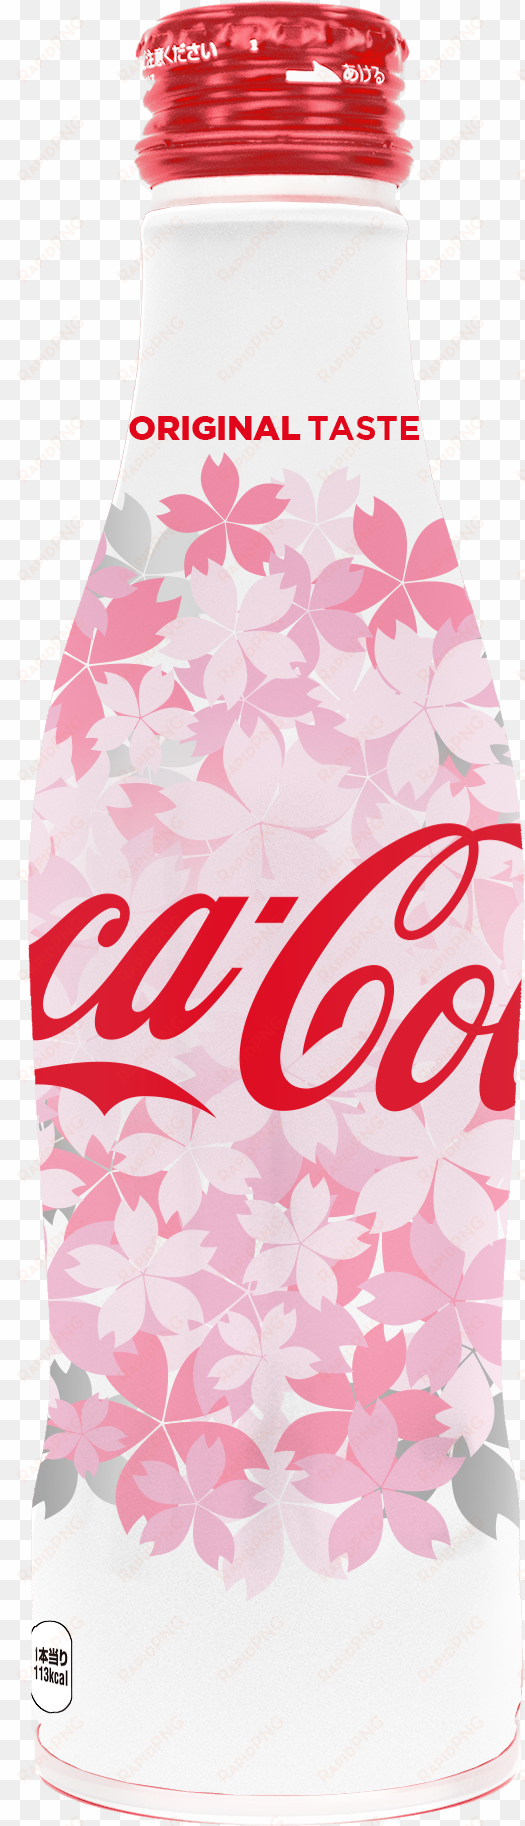 news 20170201 colasakura - coca cola white japan